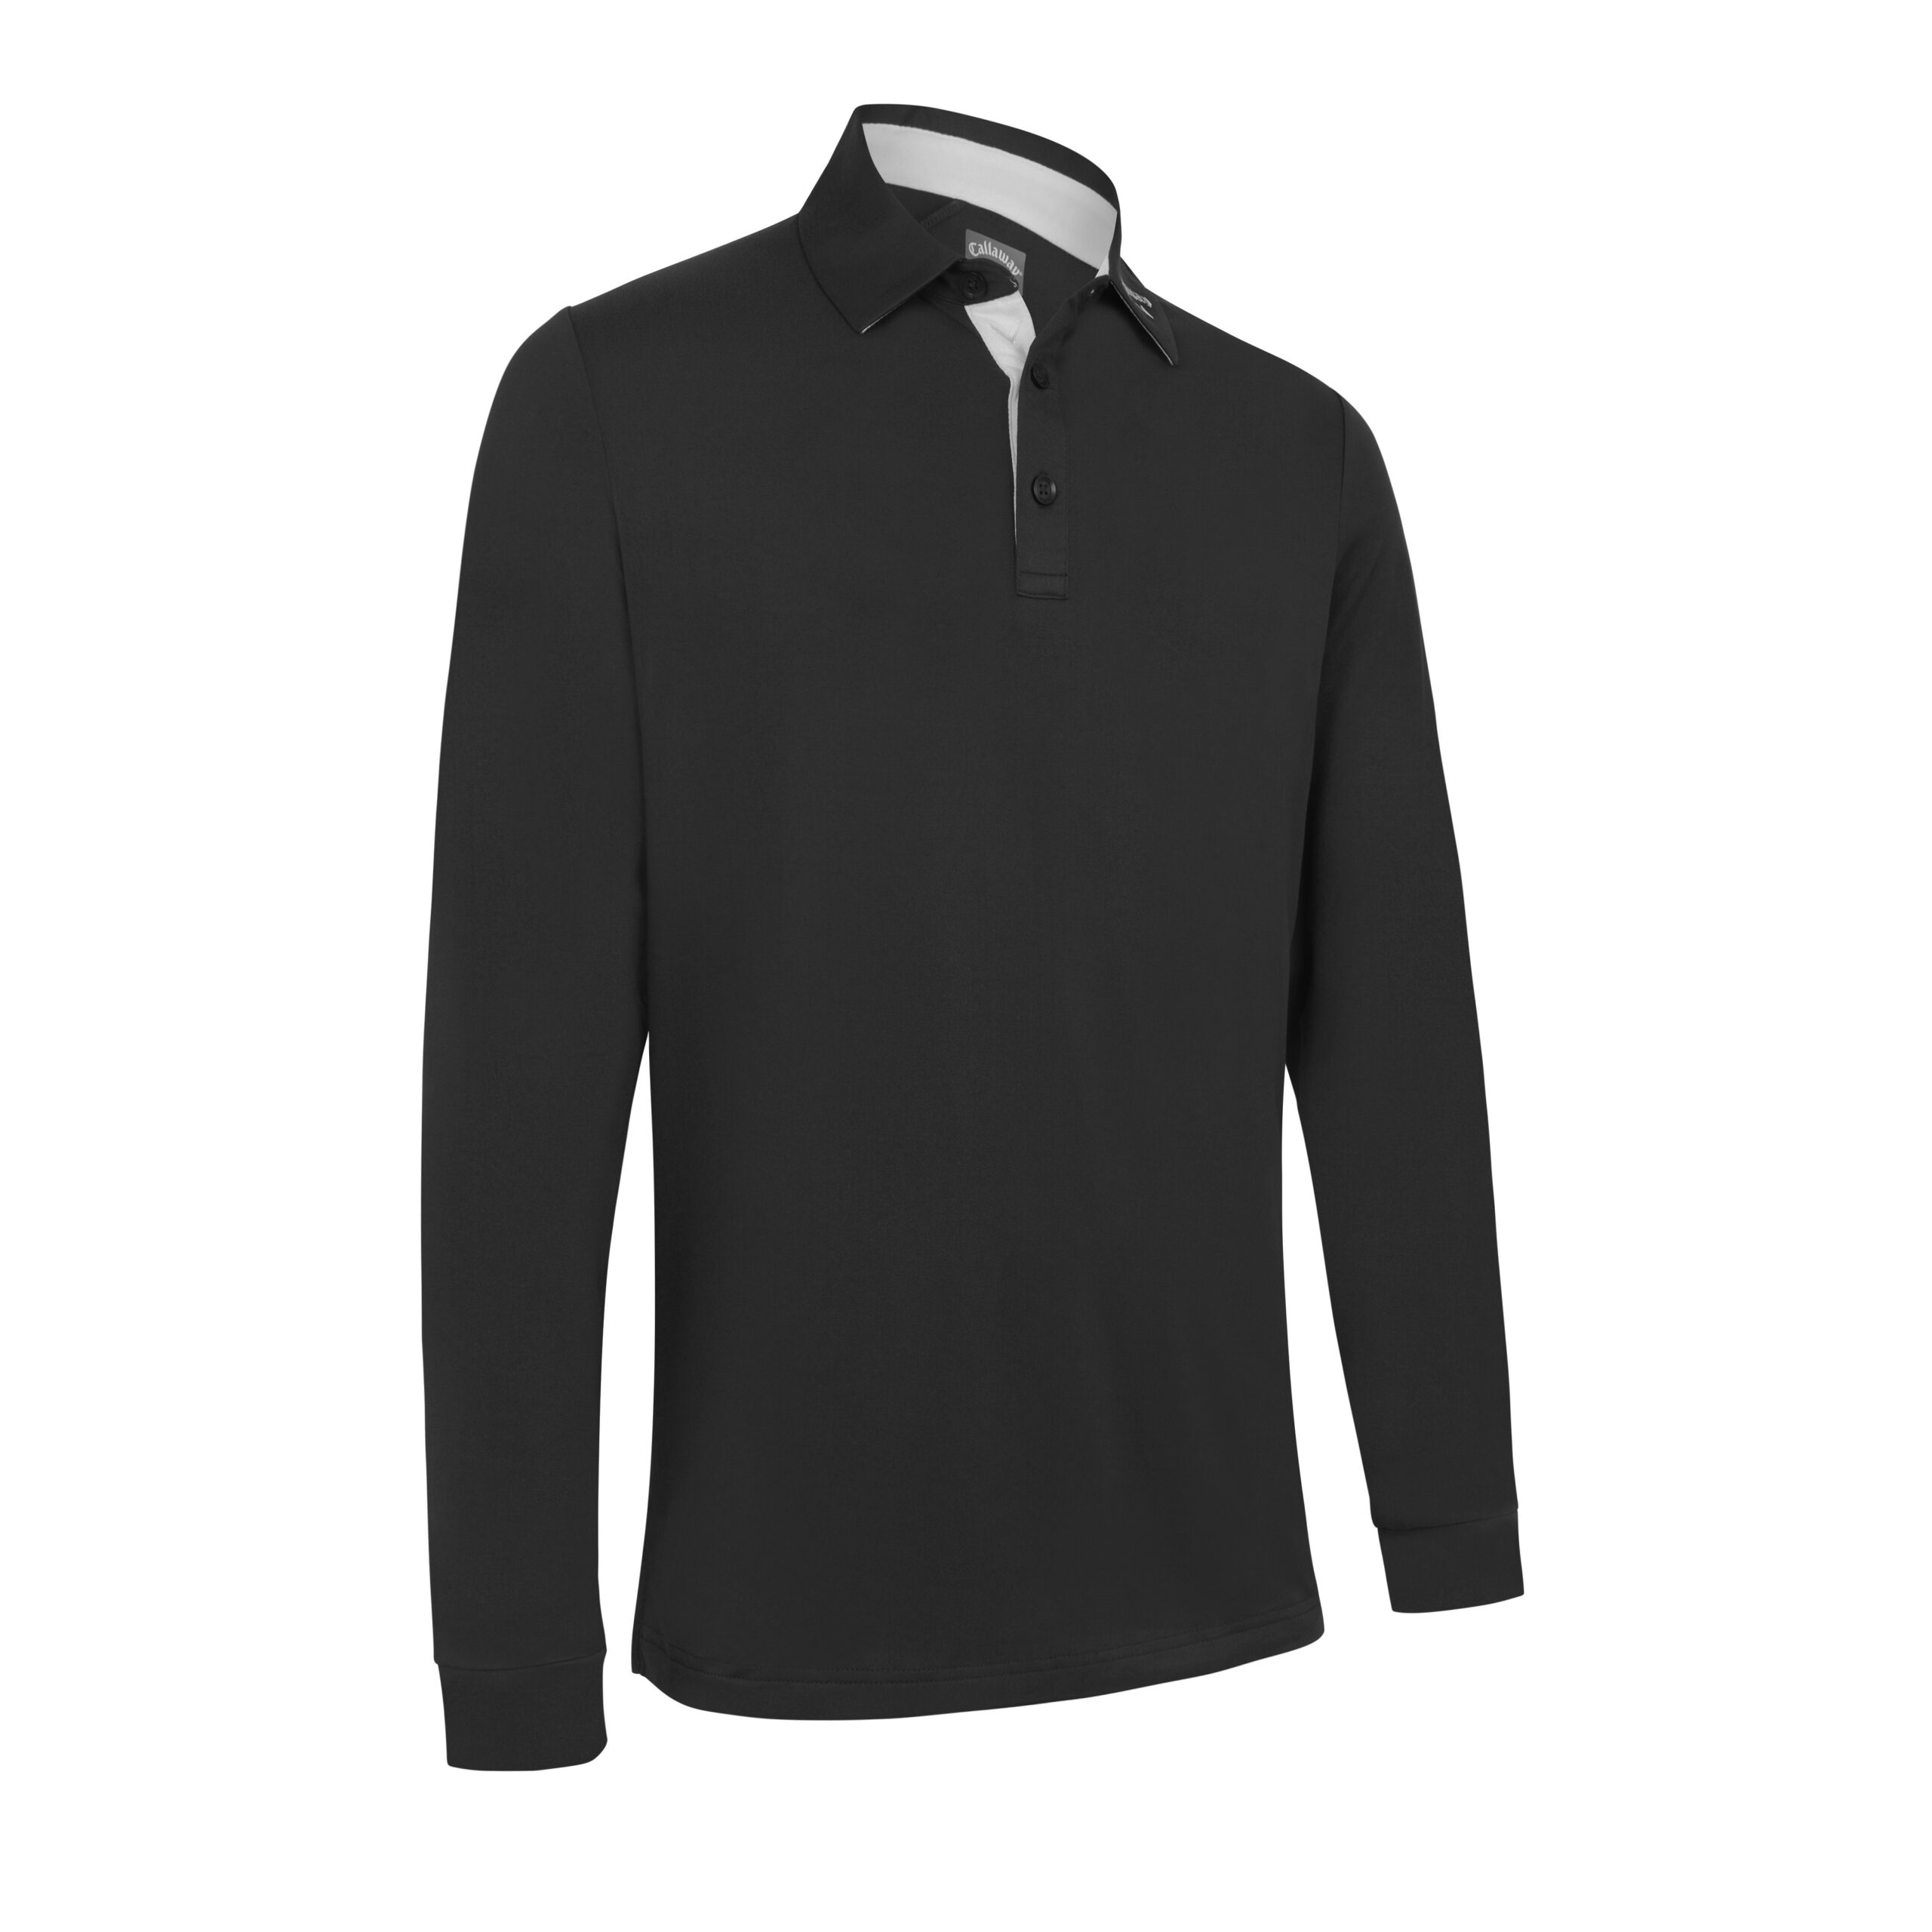 Callaway Performance pánské golfové triko s dlouhým rukávem, černé, vel. M